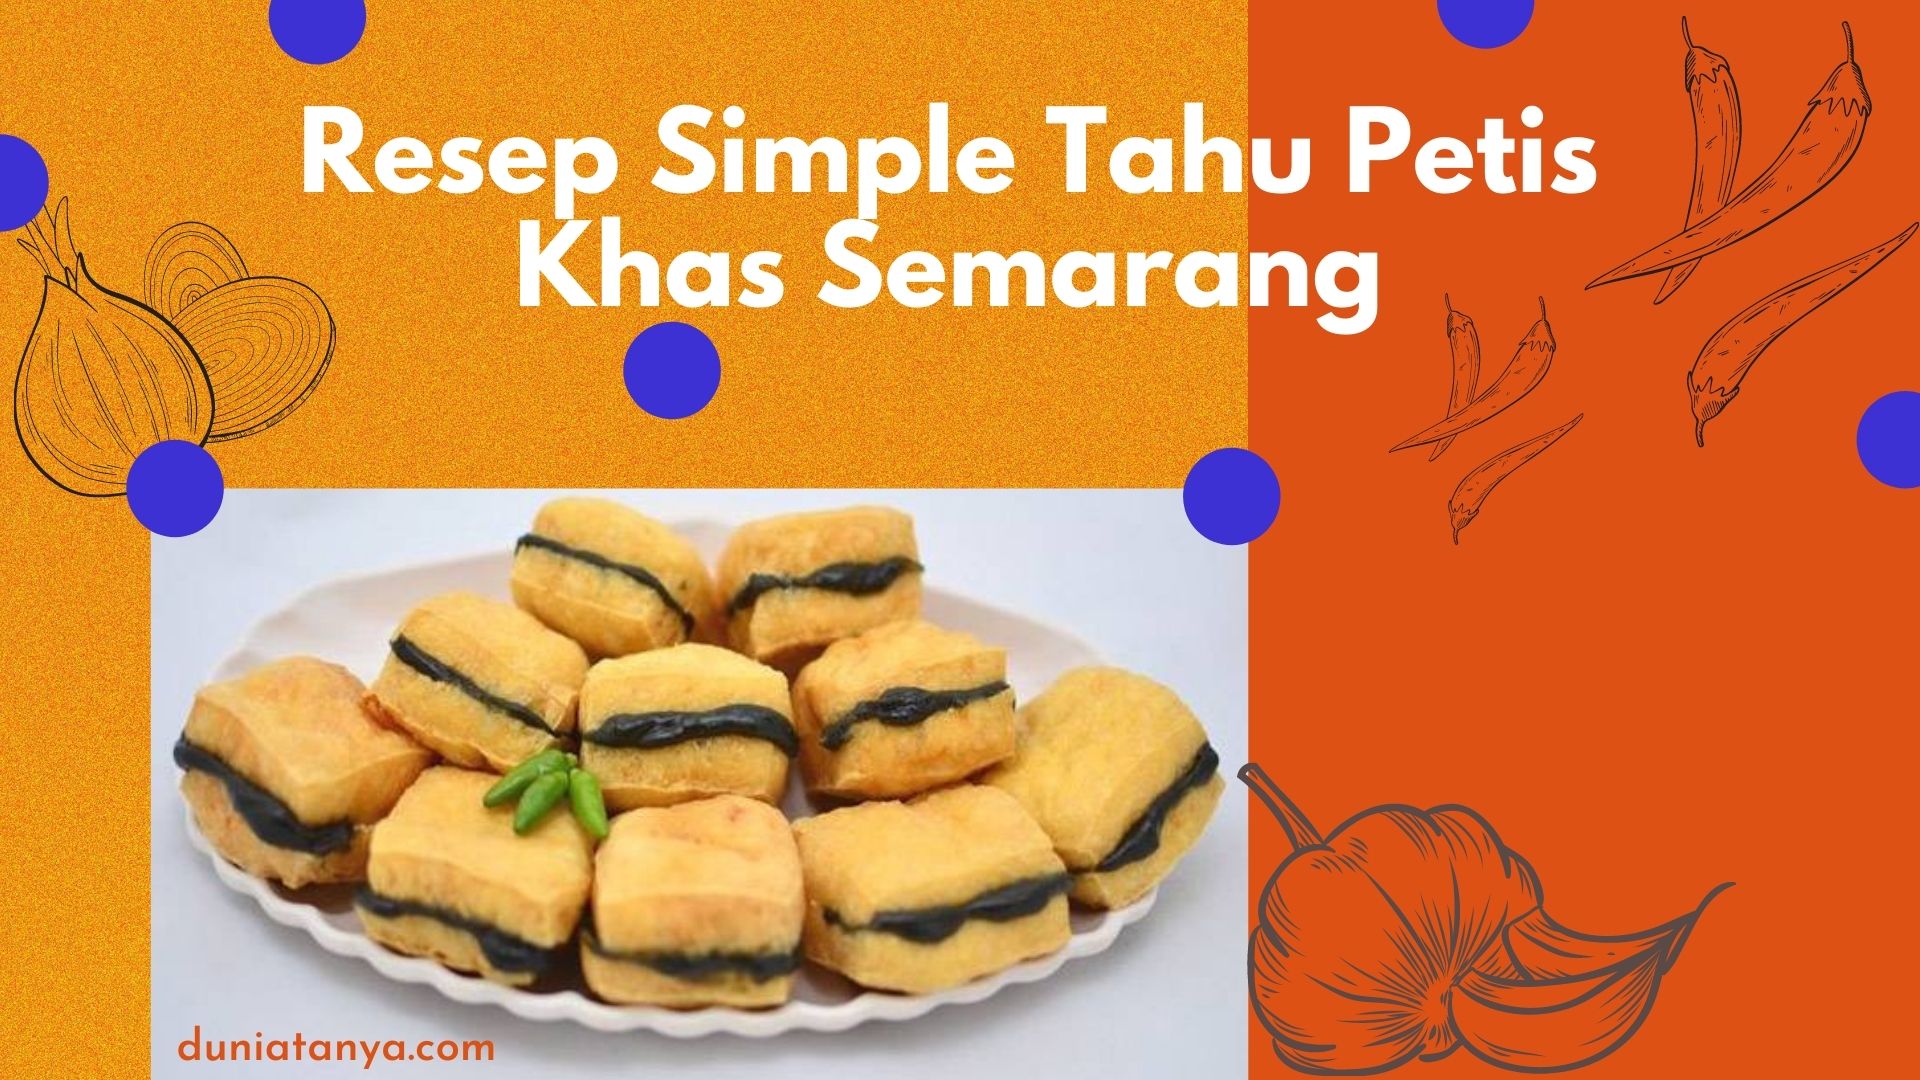 You are currently viewing Resep Simple Tahu Petis Khas Semarang